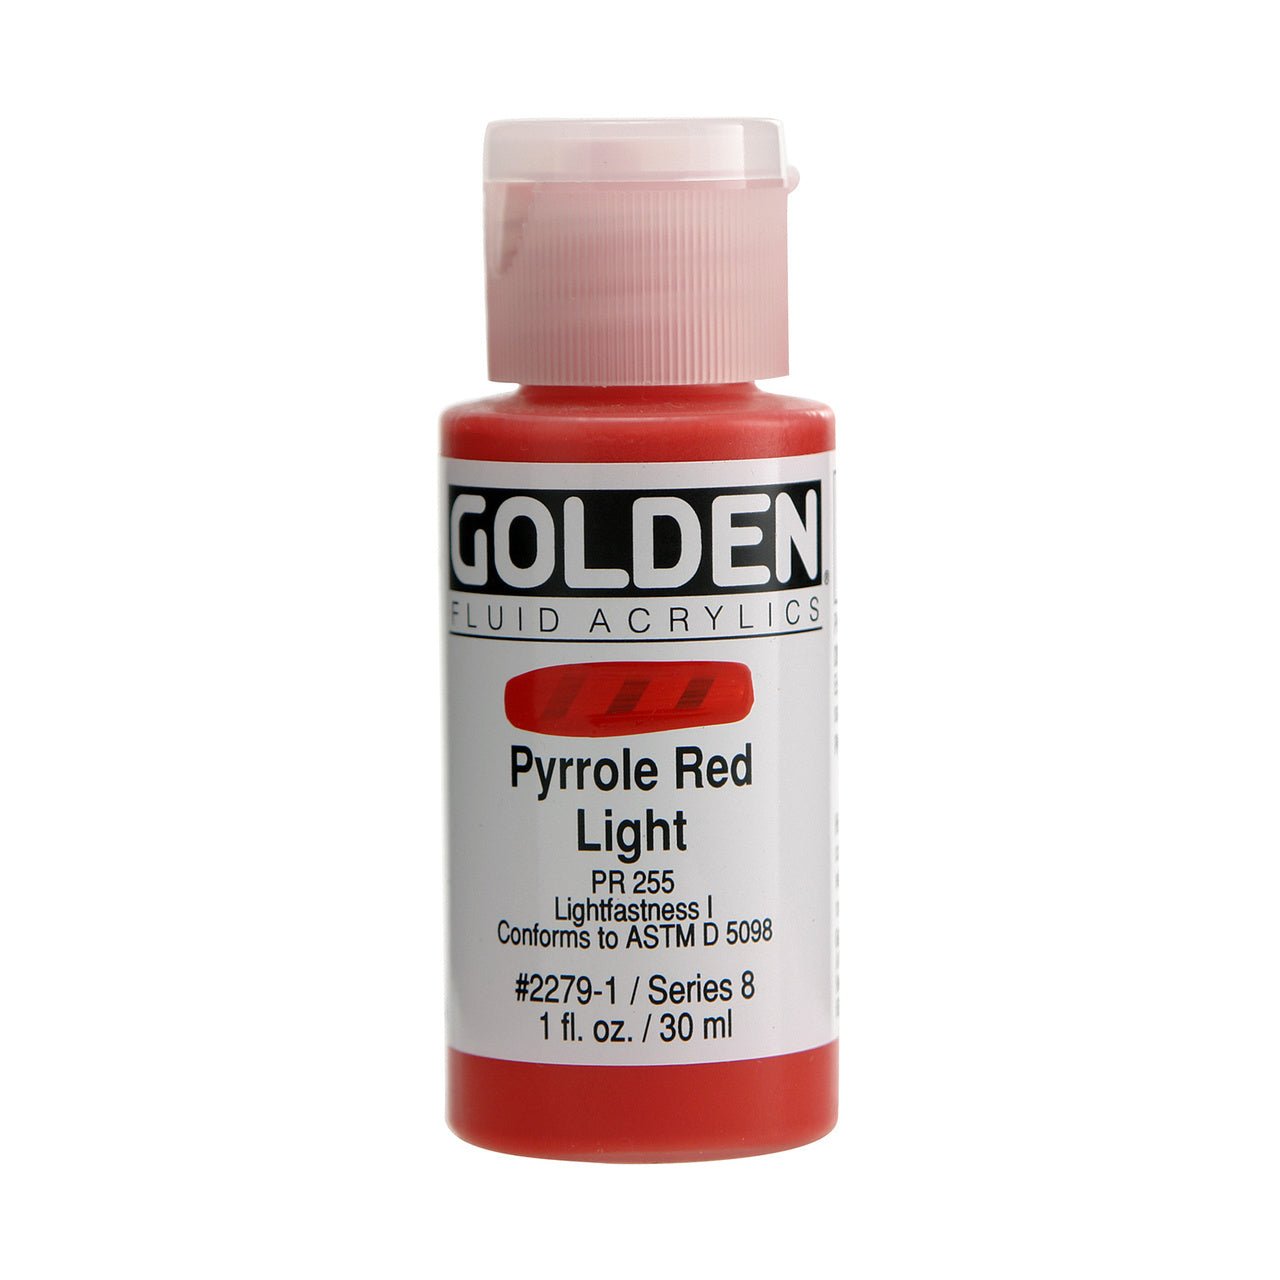 Golden Fluid Acrylic Pyrrole Red Light 1 oz - merriartist.com